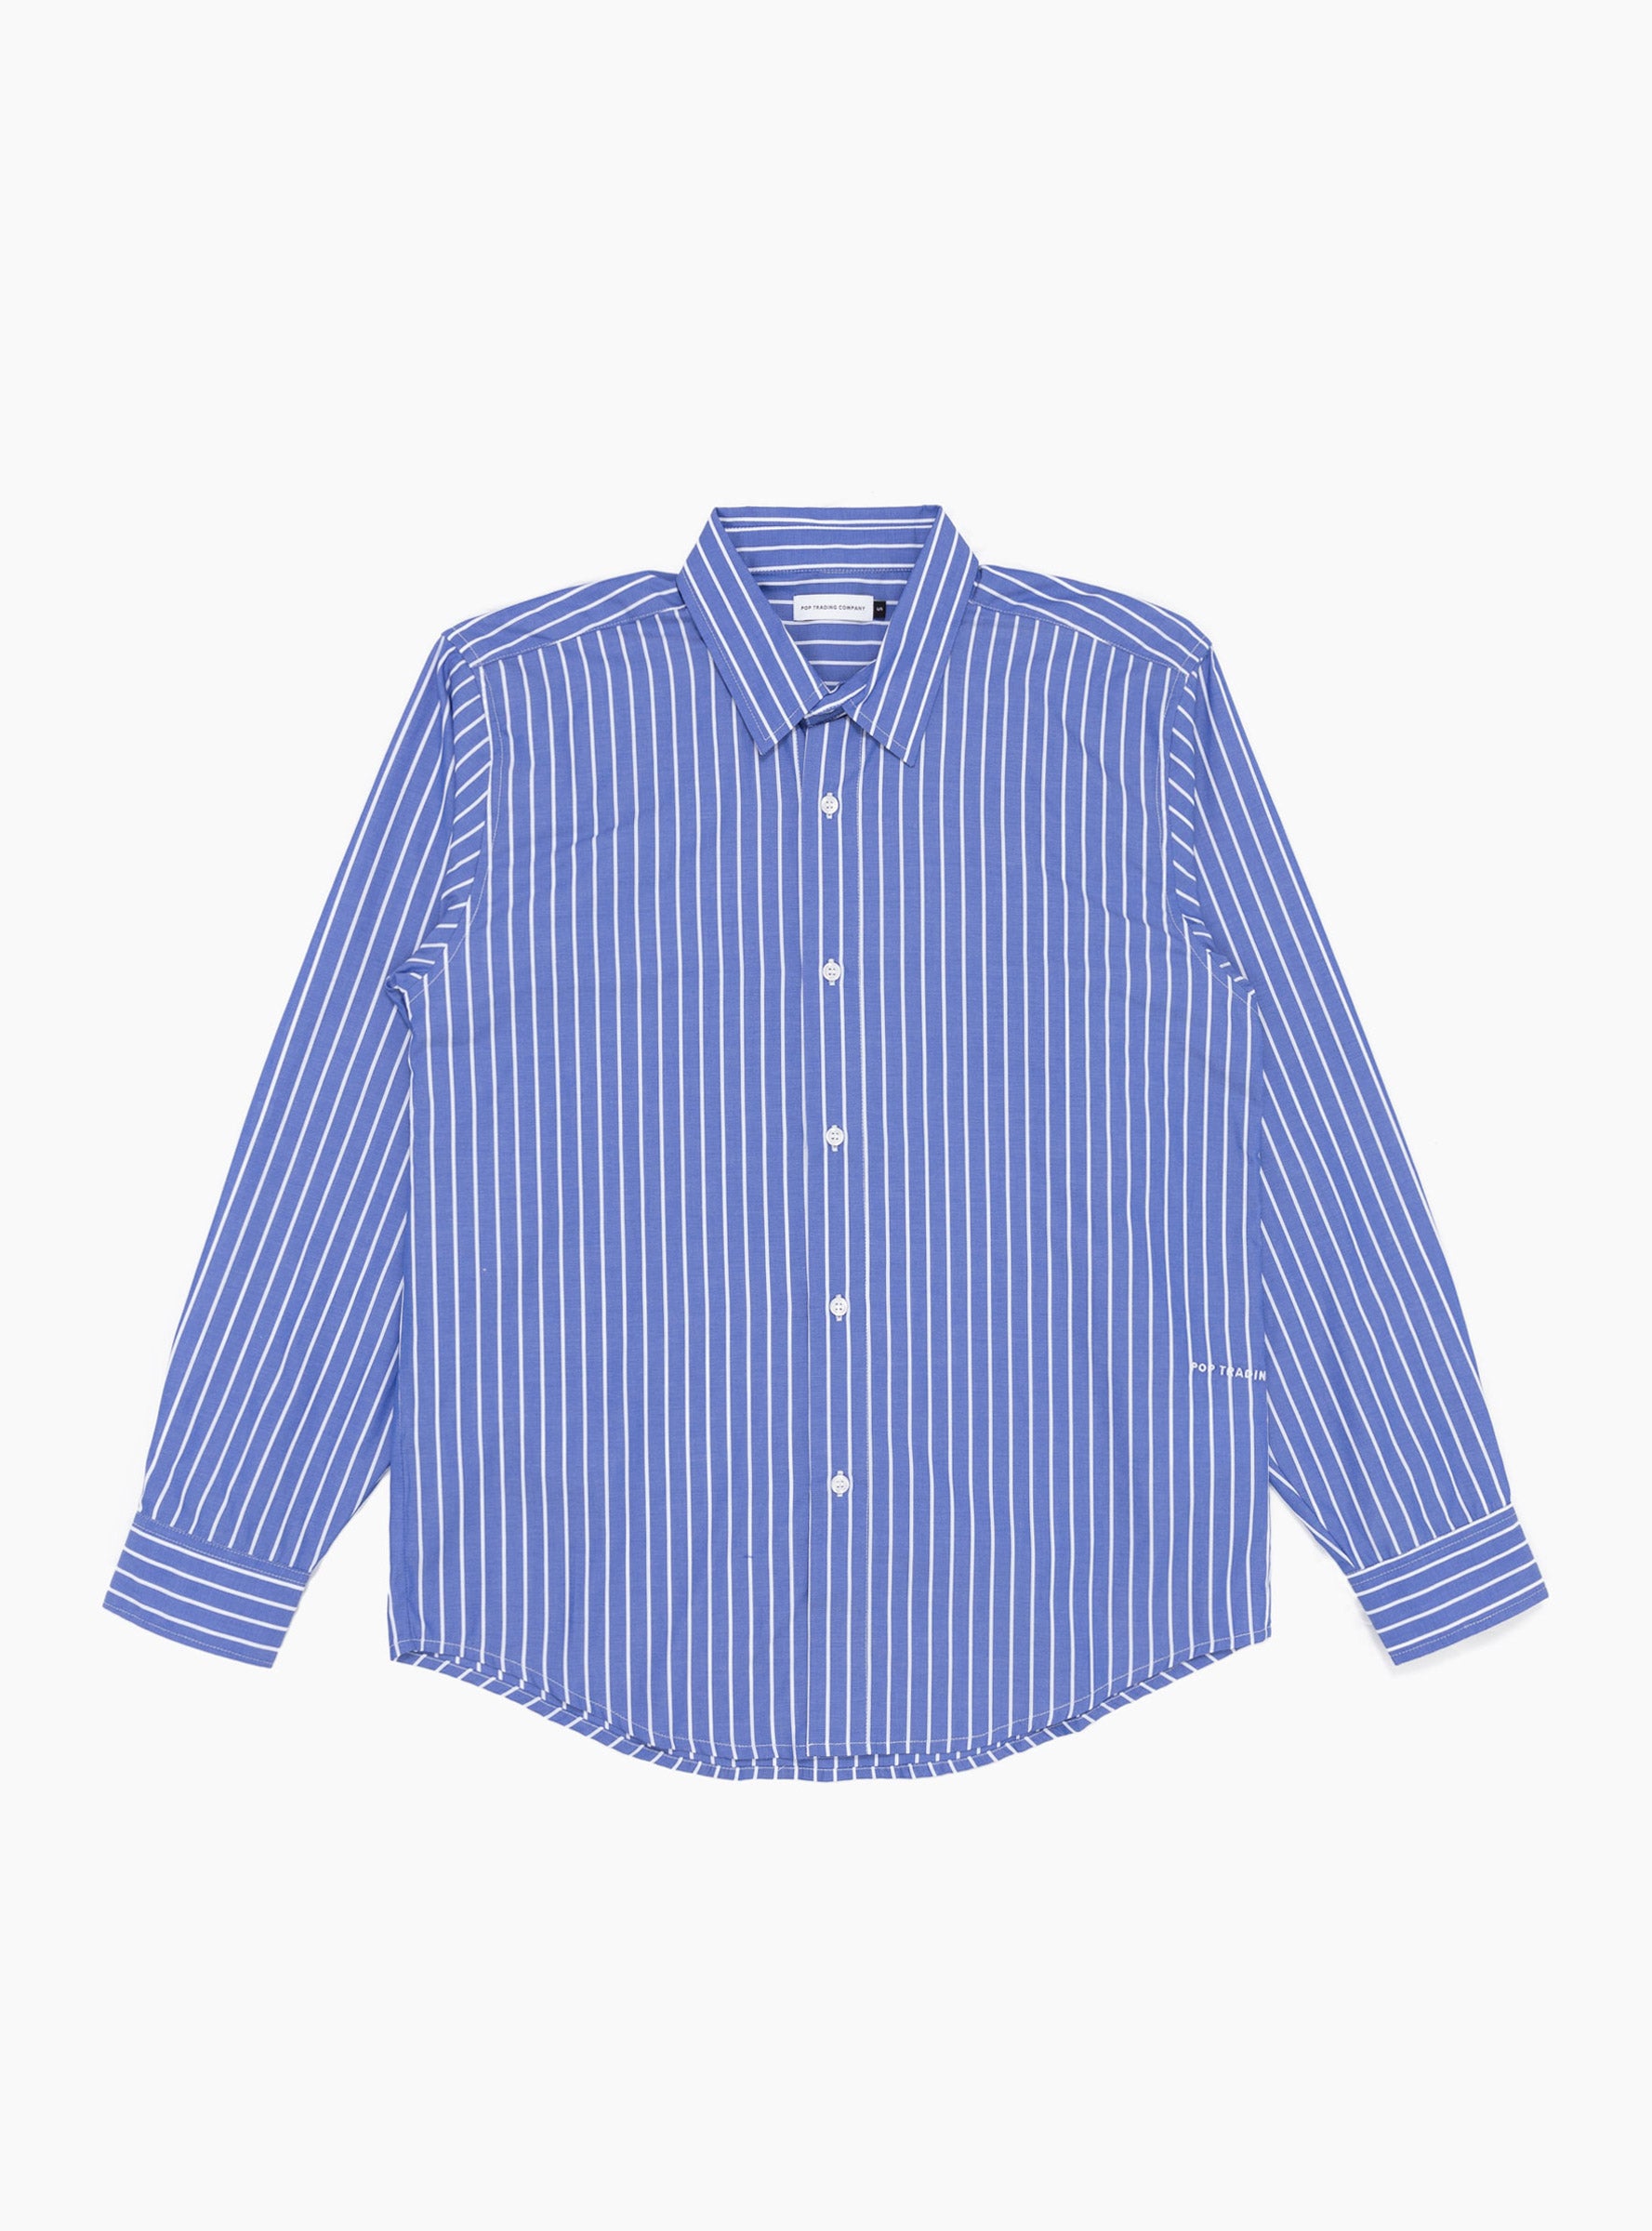 Pop Trading Company Pop Trading Company Logo Striped Shirt Blue - Size: Large